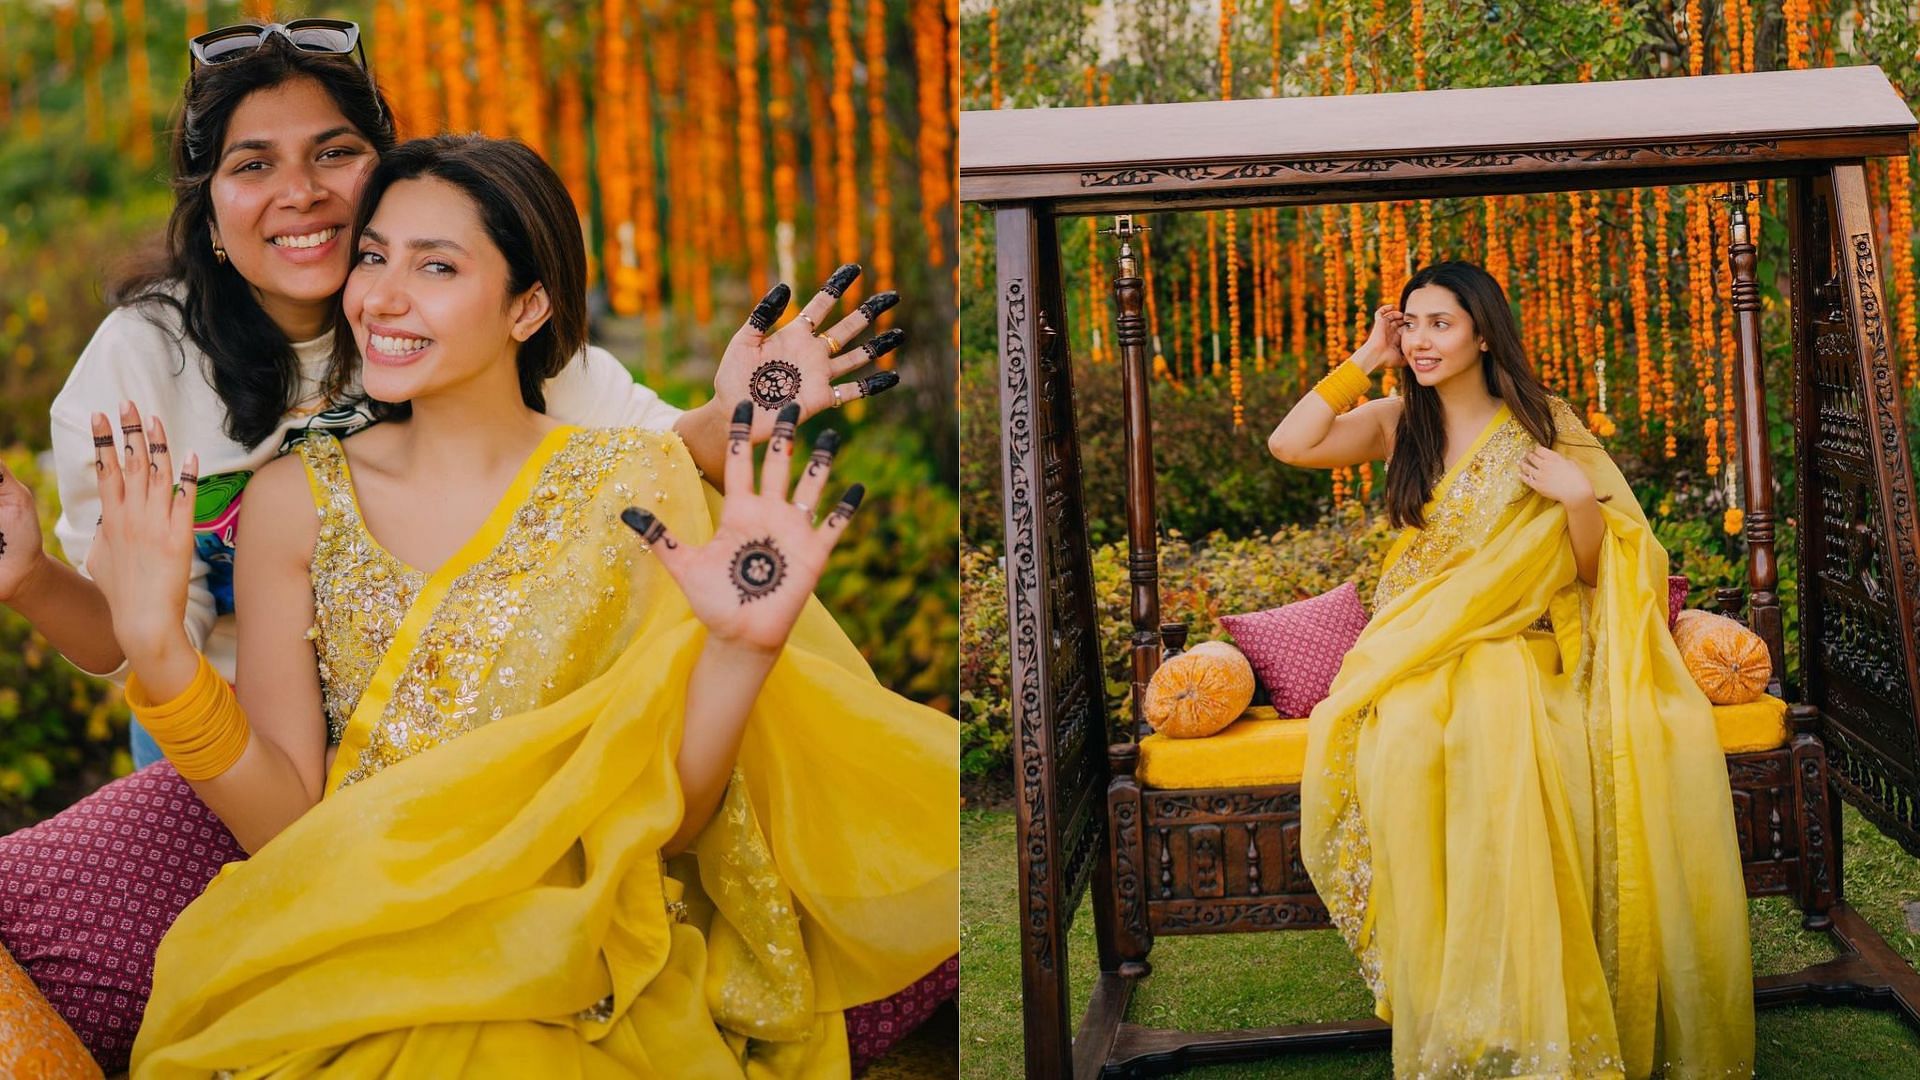 <div class="paragraphs"><p>In Pics: Mahira Khan Shares Pics From Her Pre-Wedding Festivities</p></div>